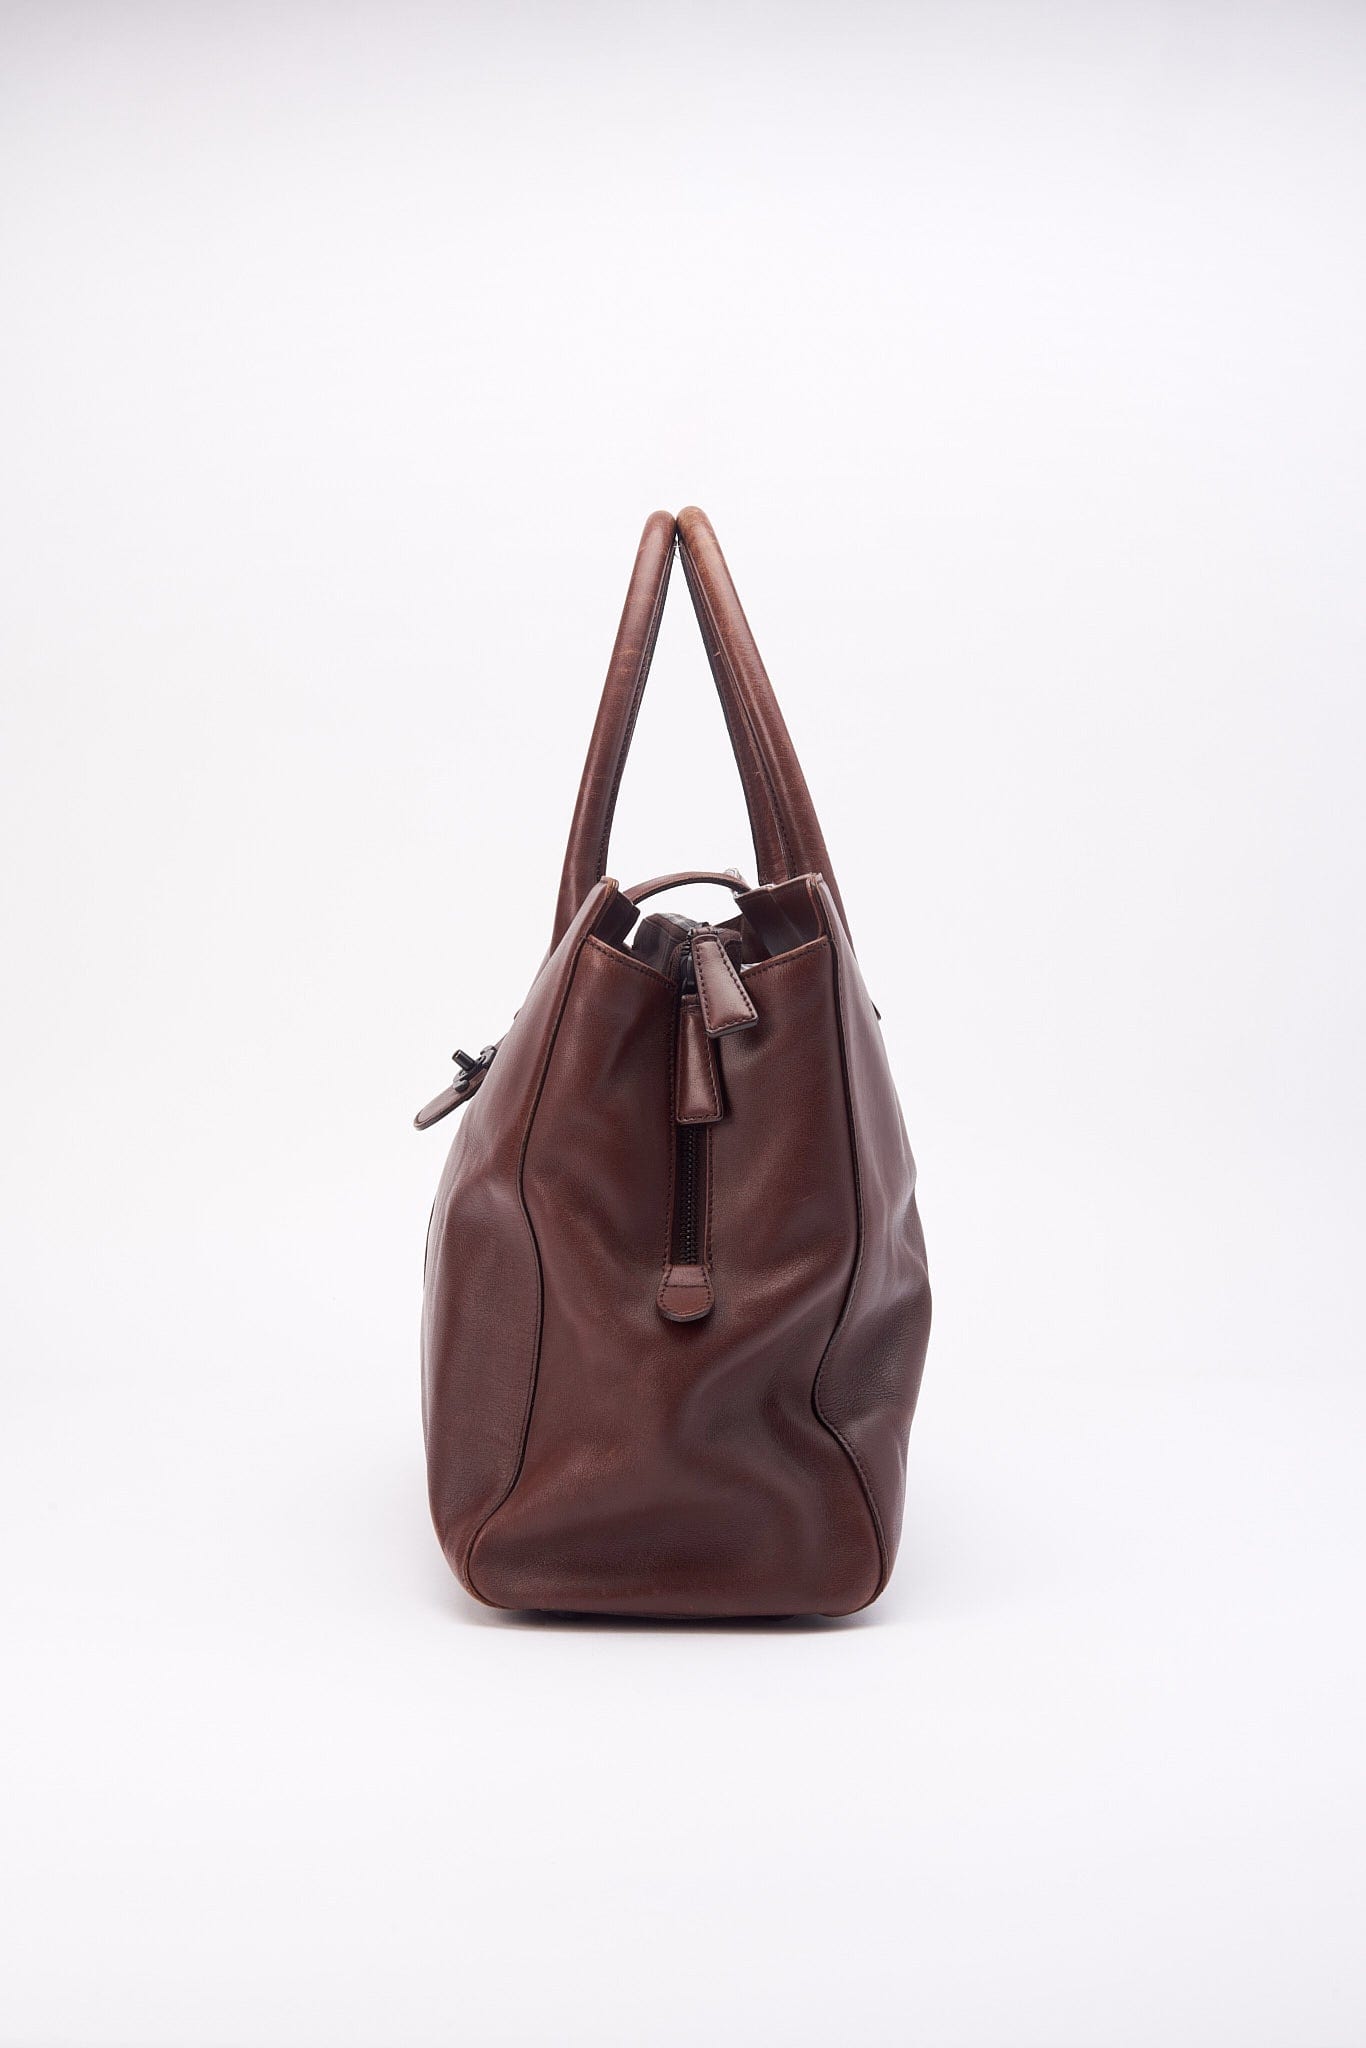 Vintage Chanel Brown Tote Bag